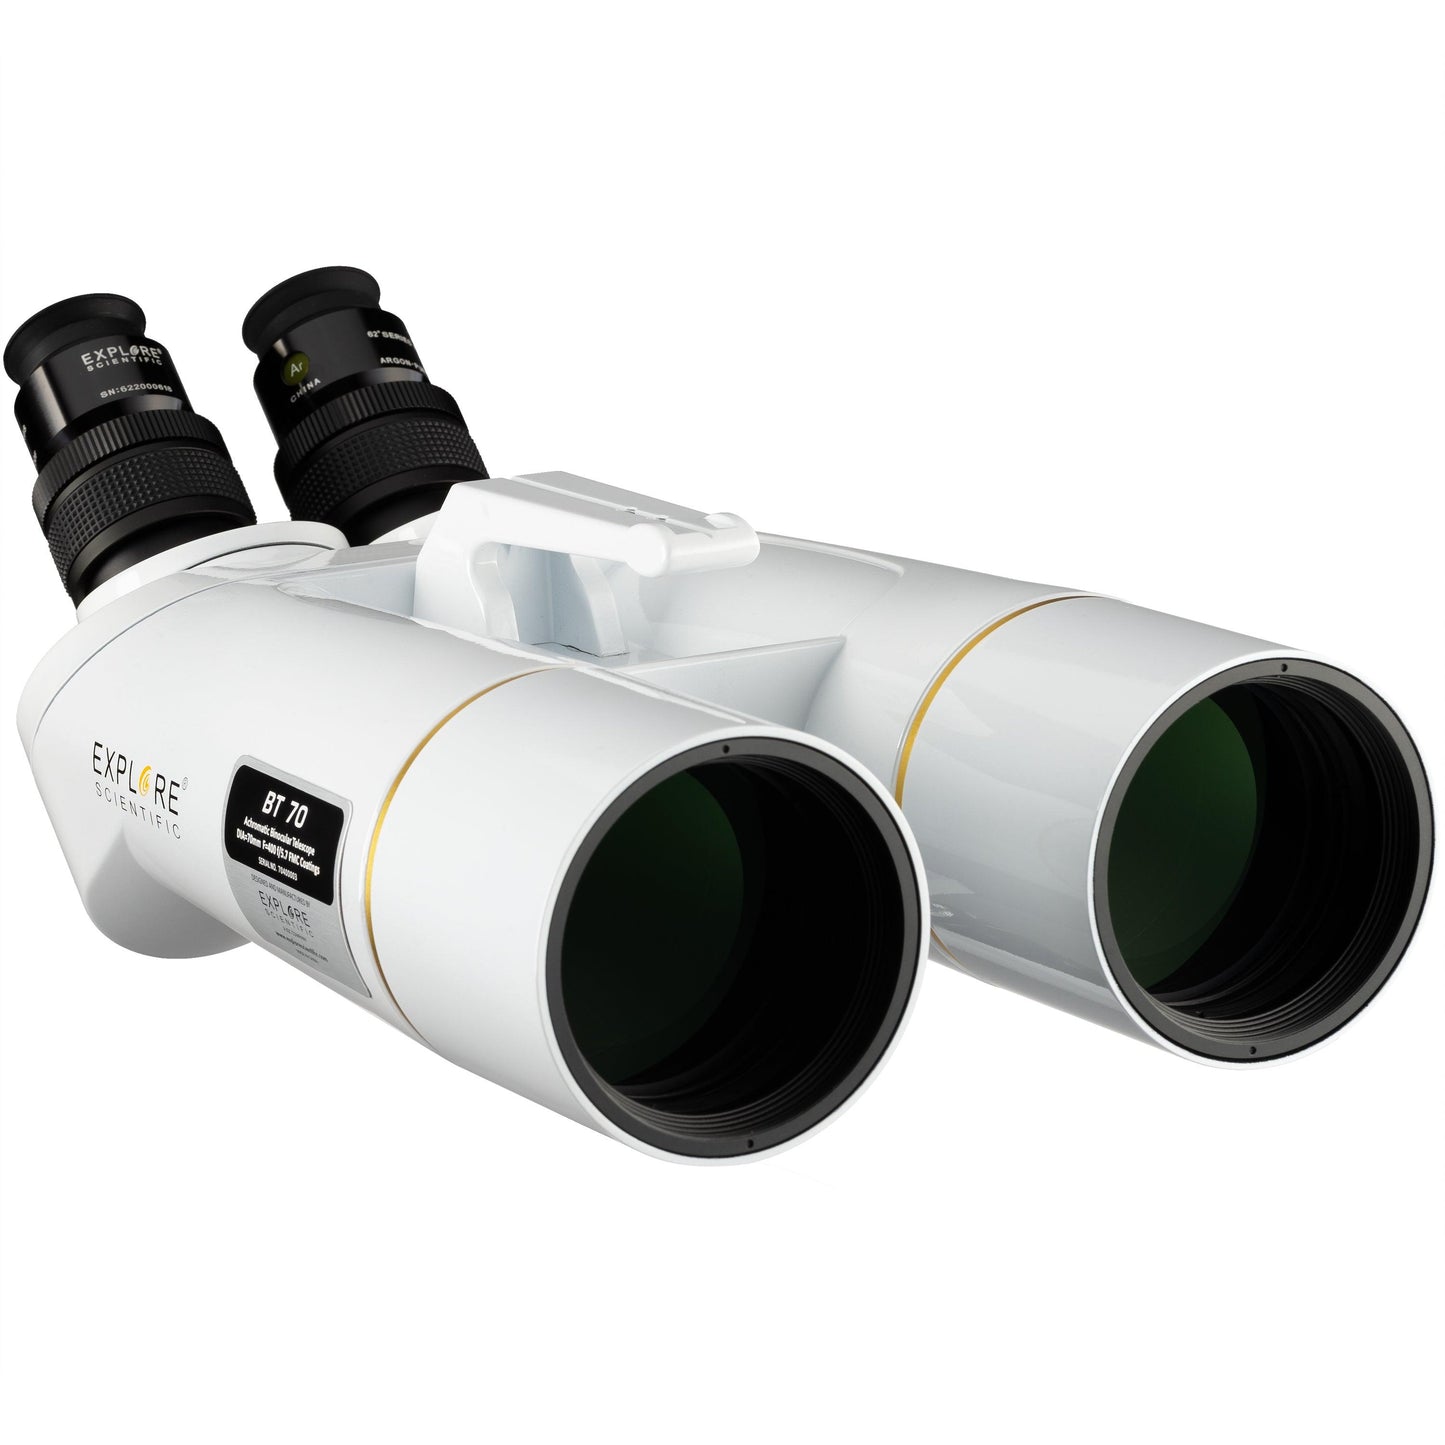 BT-70 SF Large Binoculars with 62 Degree LER Eyepieces - Silverlight Optics